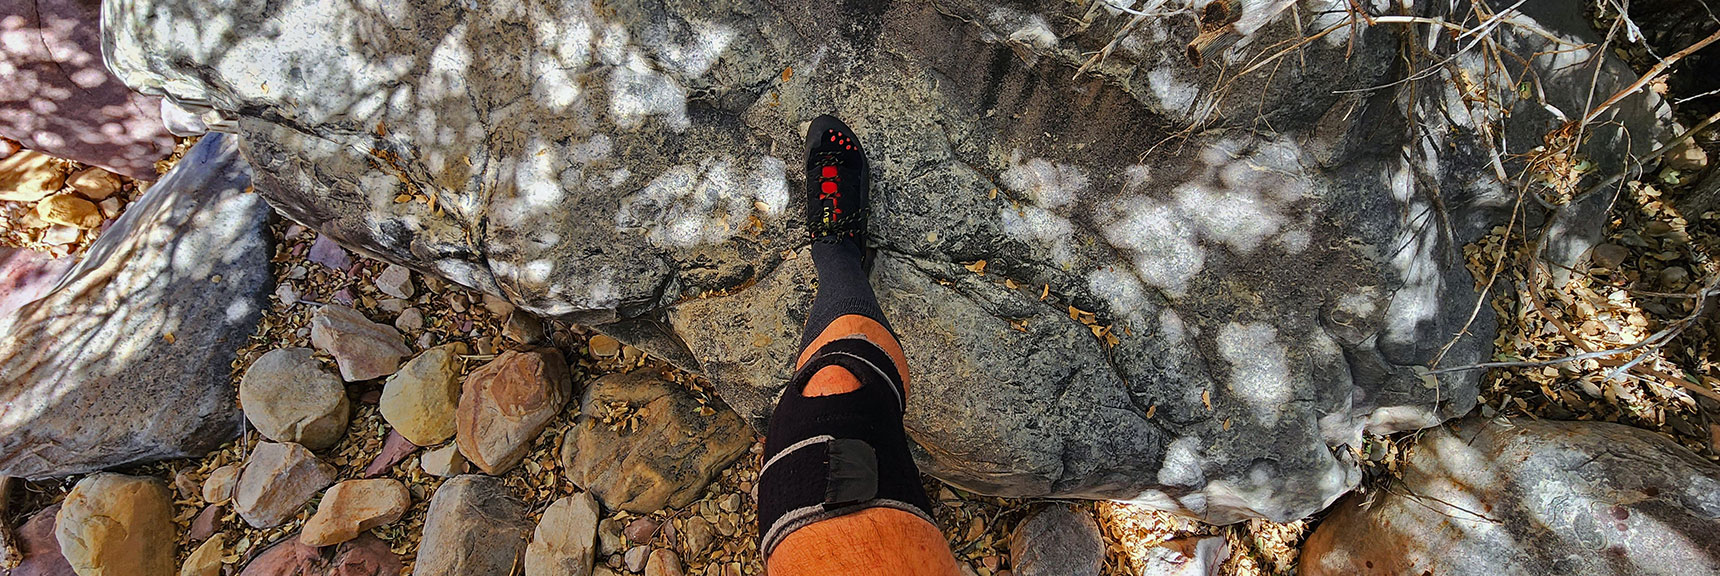 Knee Brace for Stability/Cushioning, Rock Climbing Shoes for Traction on Boulders | Juniper Peak Summit | Rainbow Mountain Wilderness, Nevada | David Smith, LasVegasAreaTrails.com